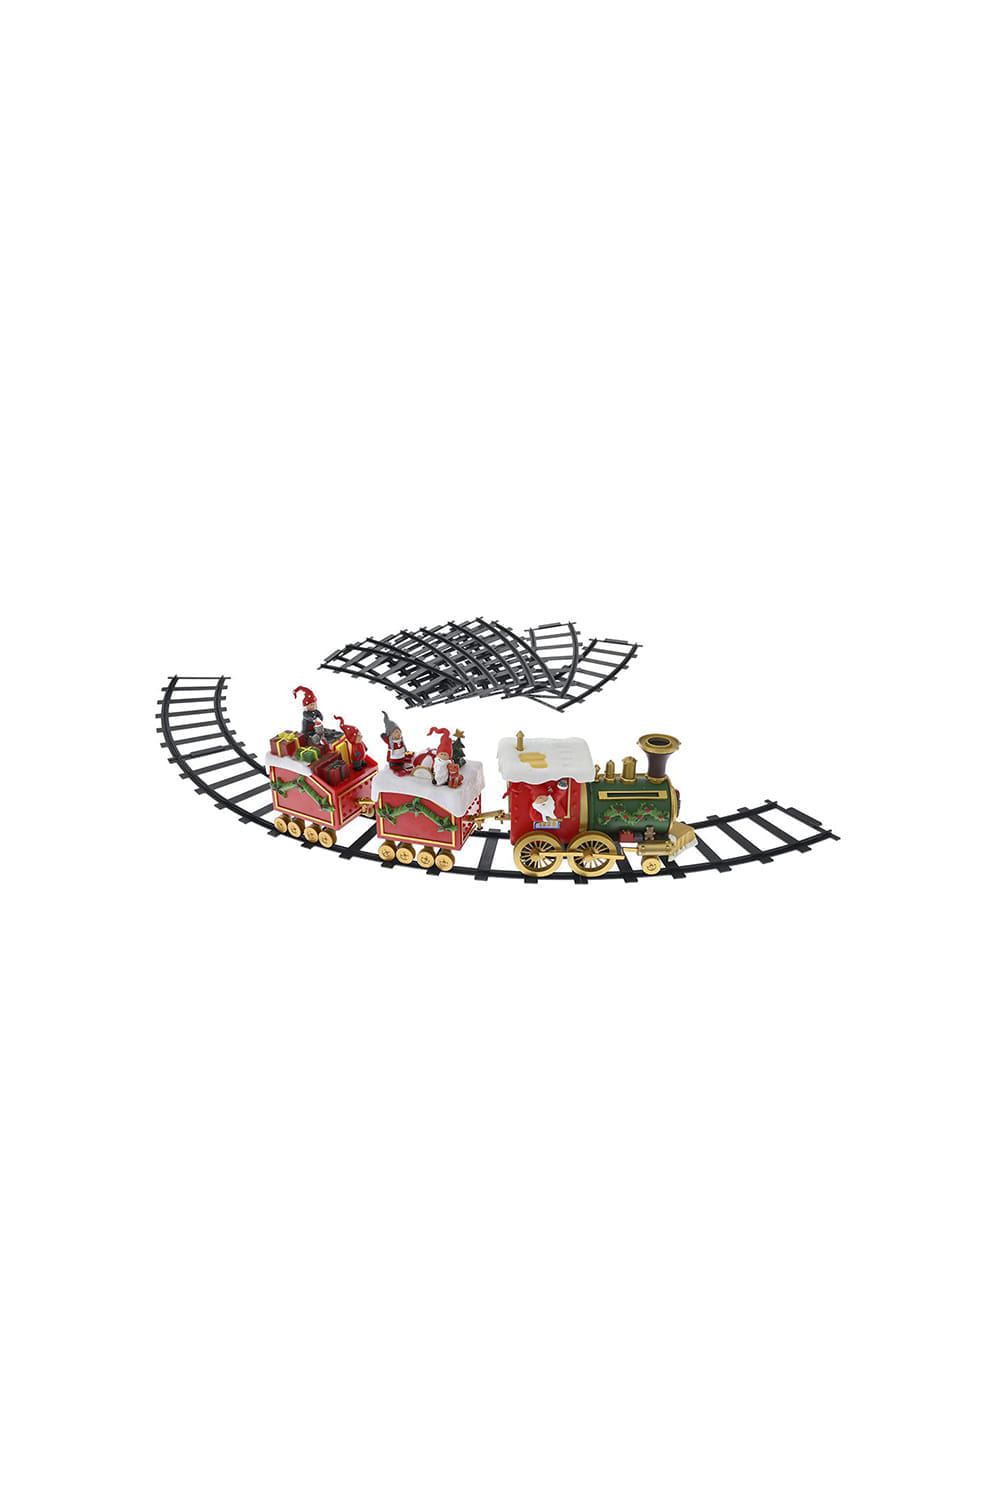 Athome Pavloudakis - Χριστουγεννιάτικο συνθετικό πολύχρωμο τραινάκι με κίνηση και μουσική (10 cm)